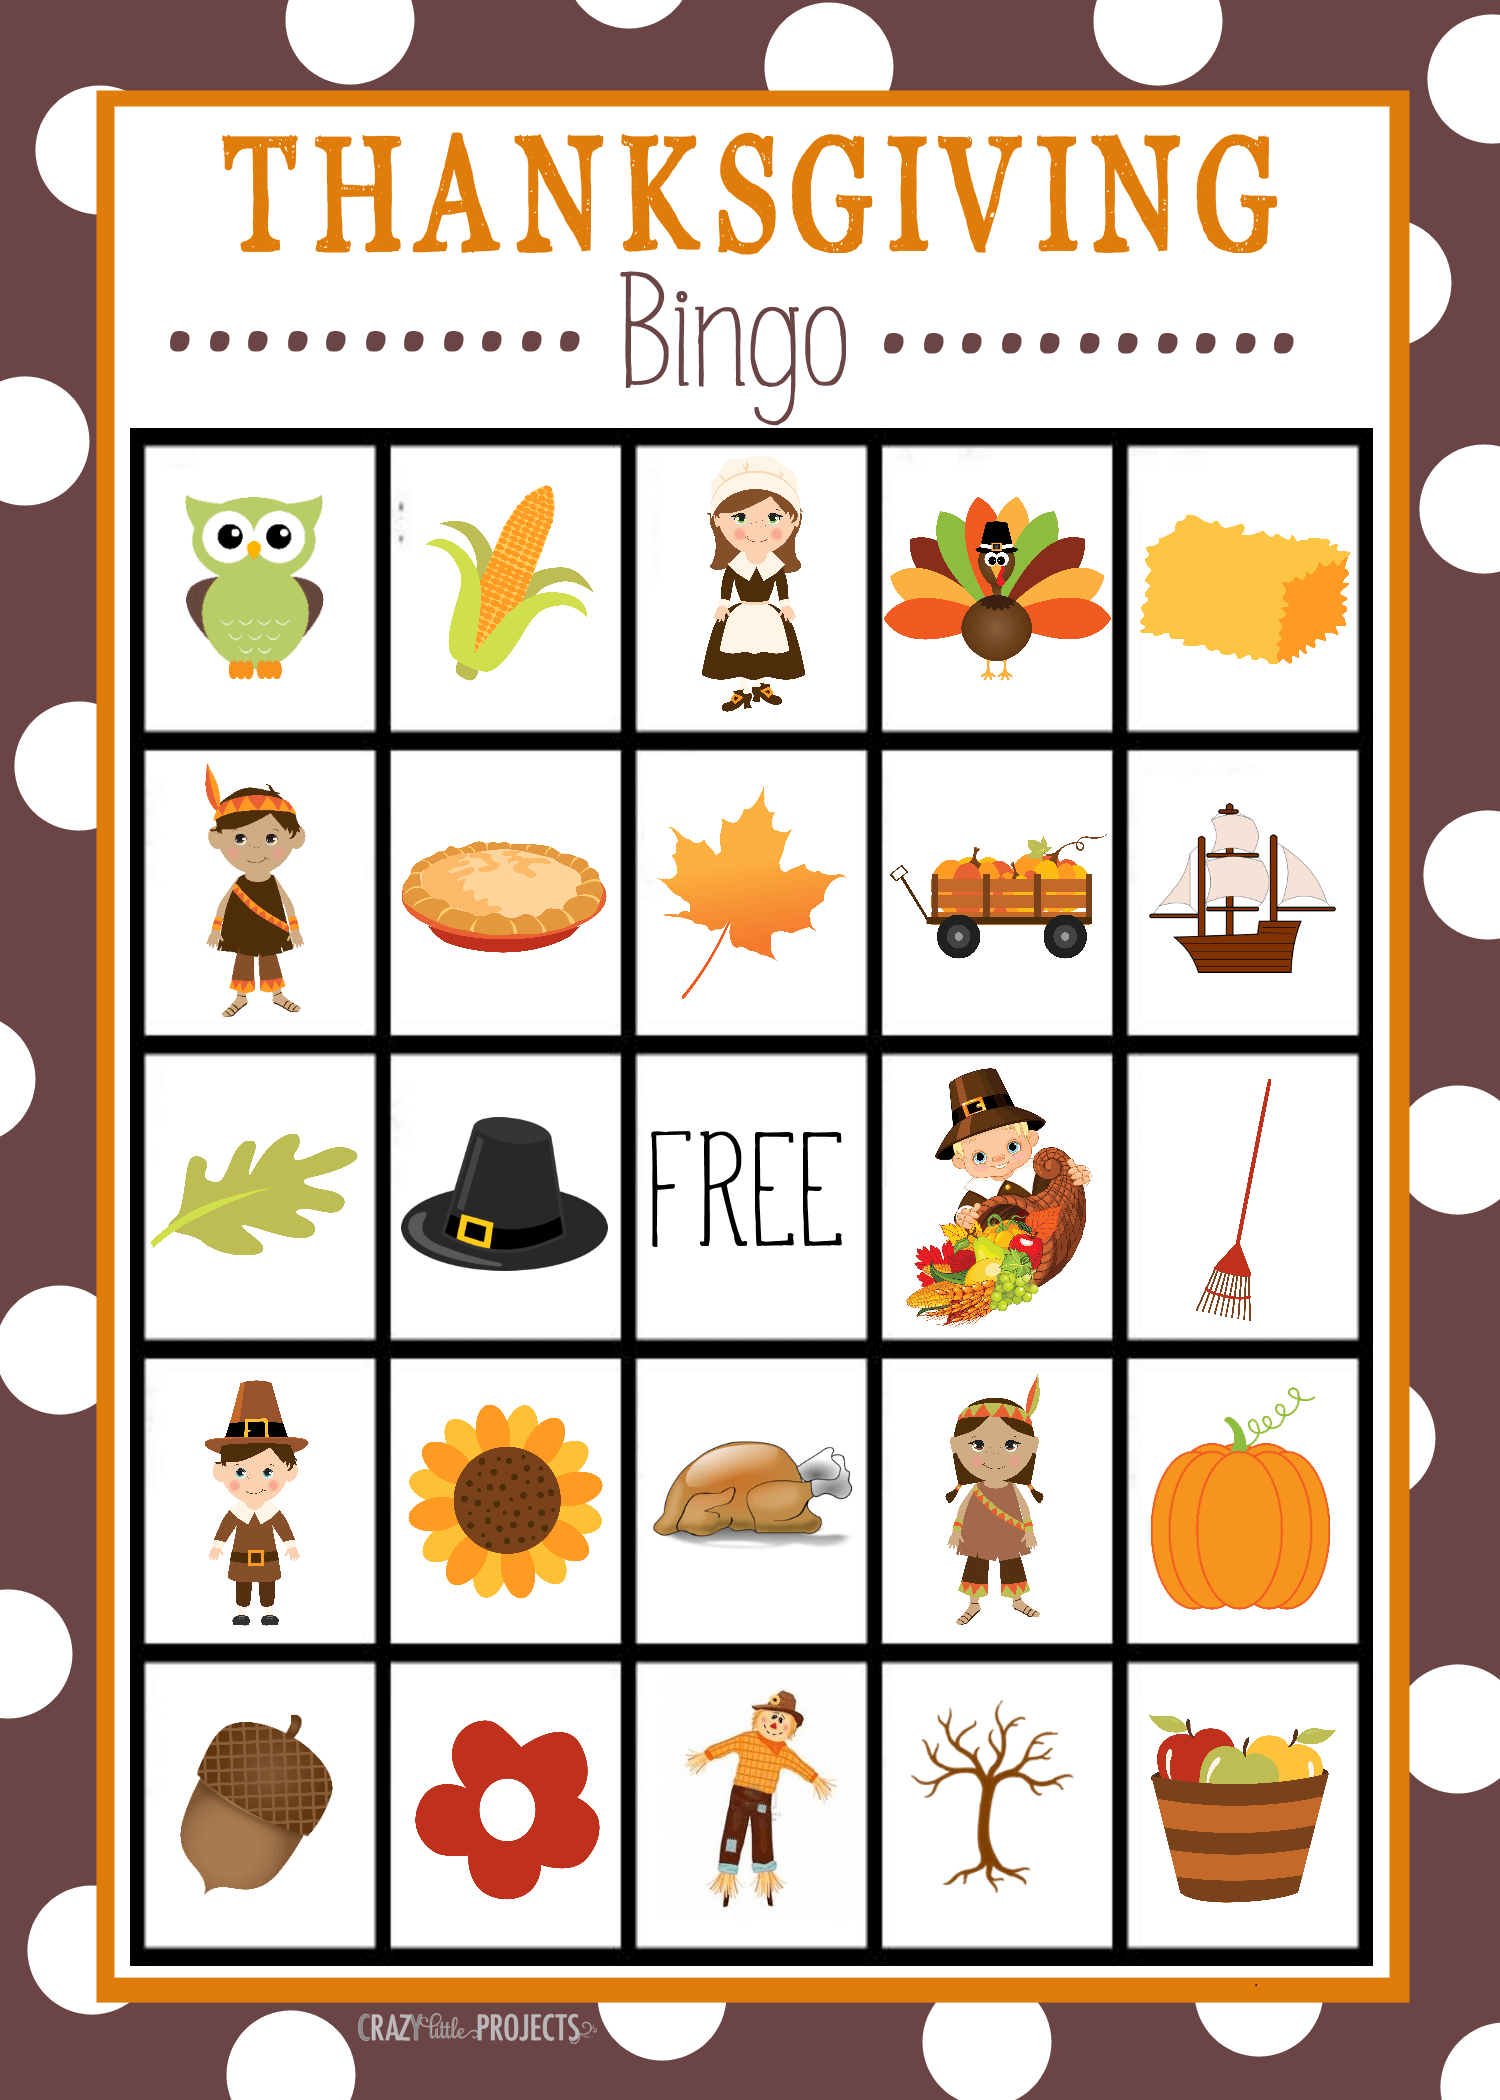 DIY Thanksgiving bingo for both kids and granparents